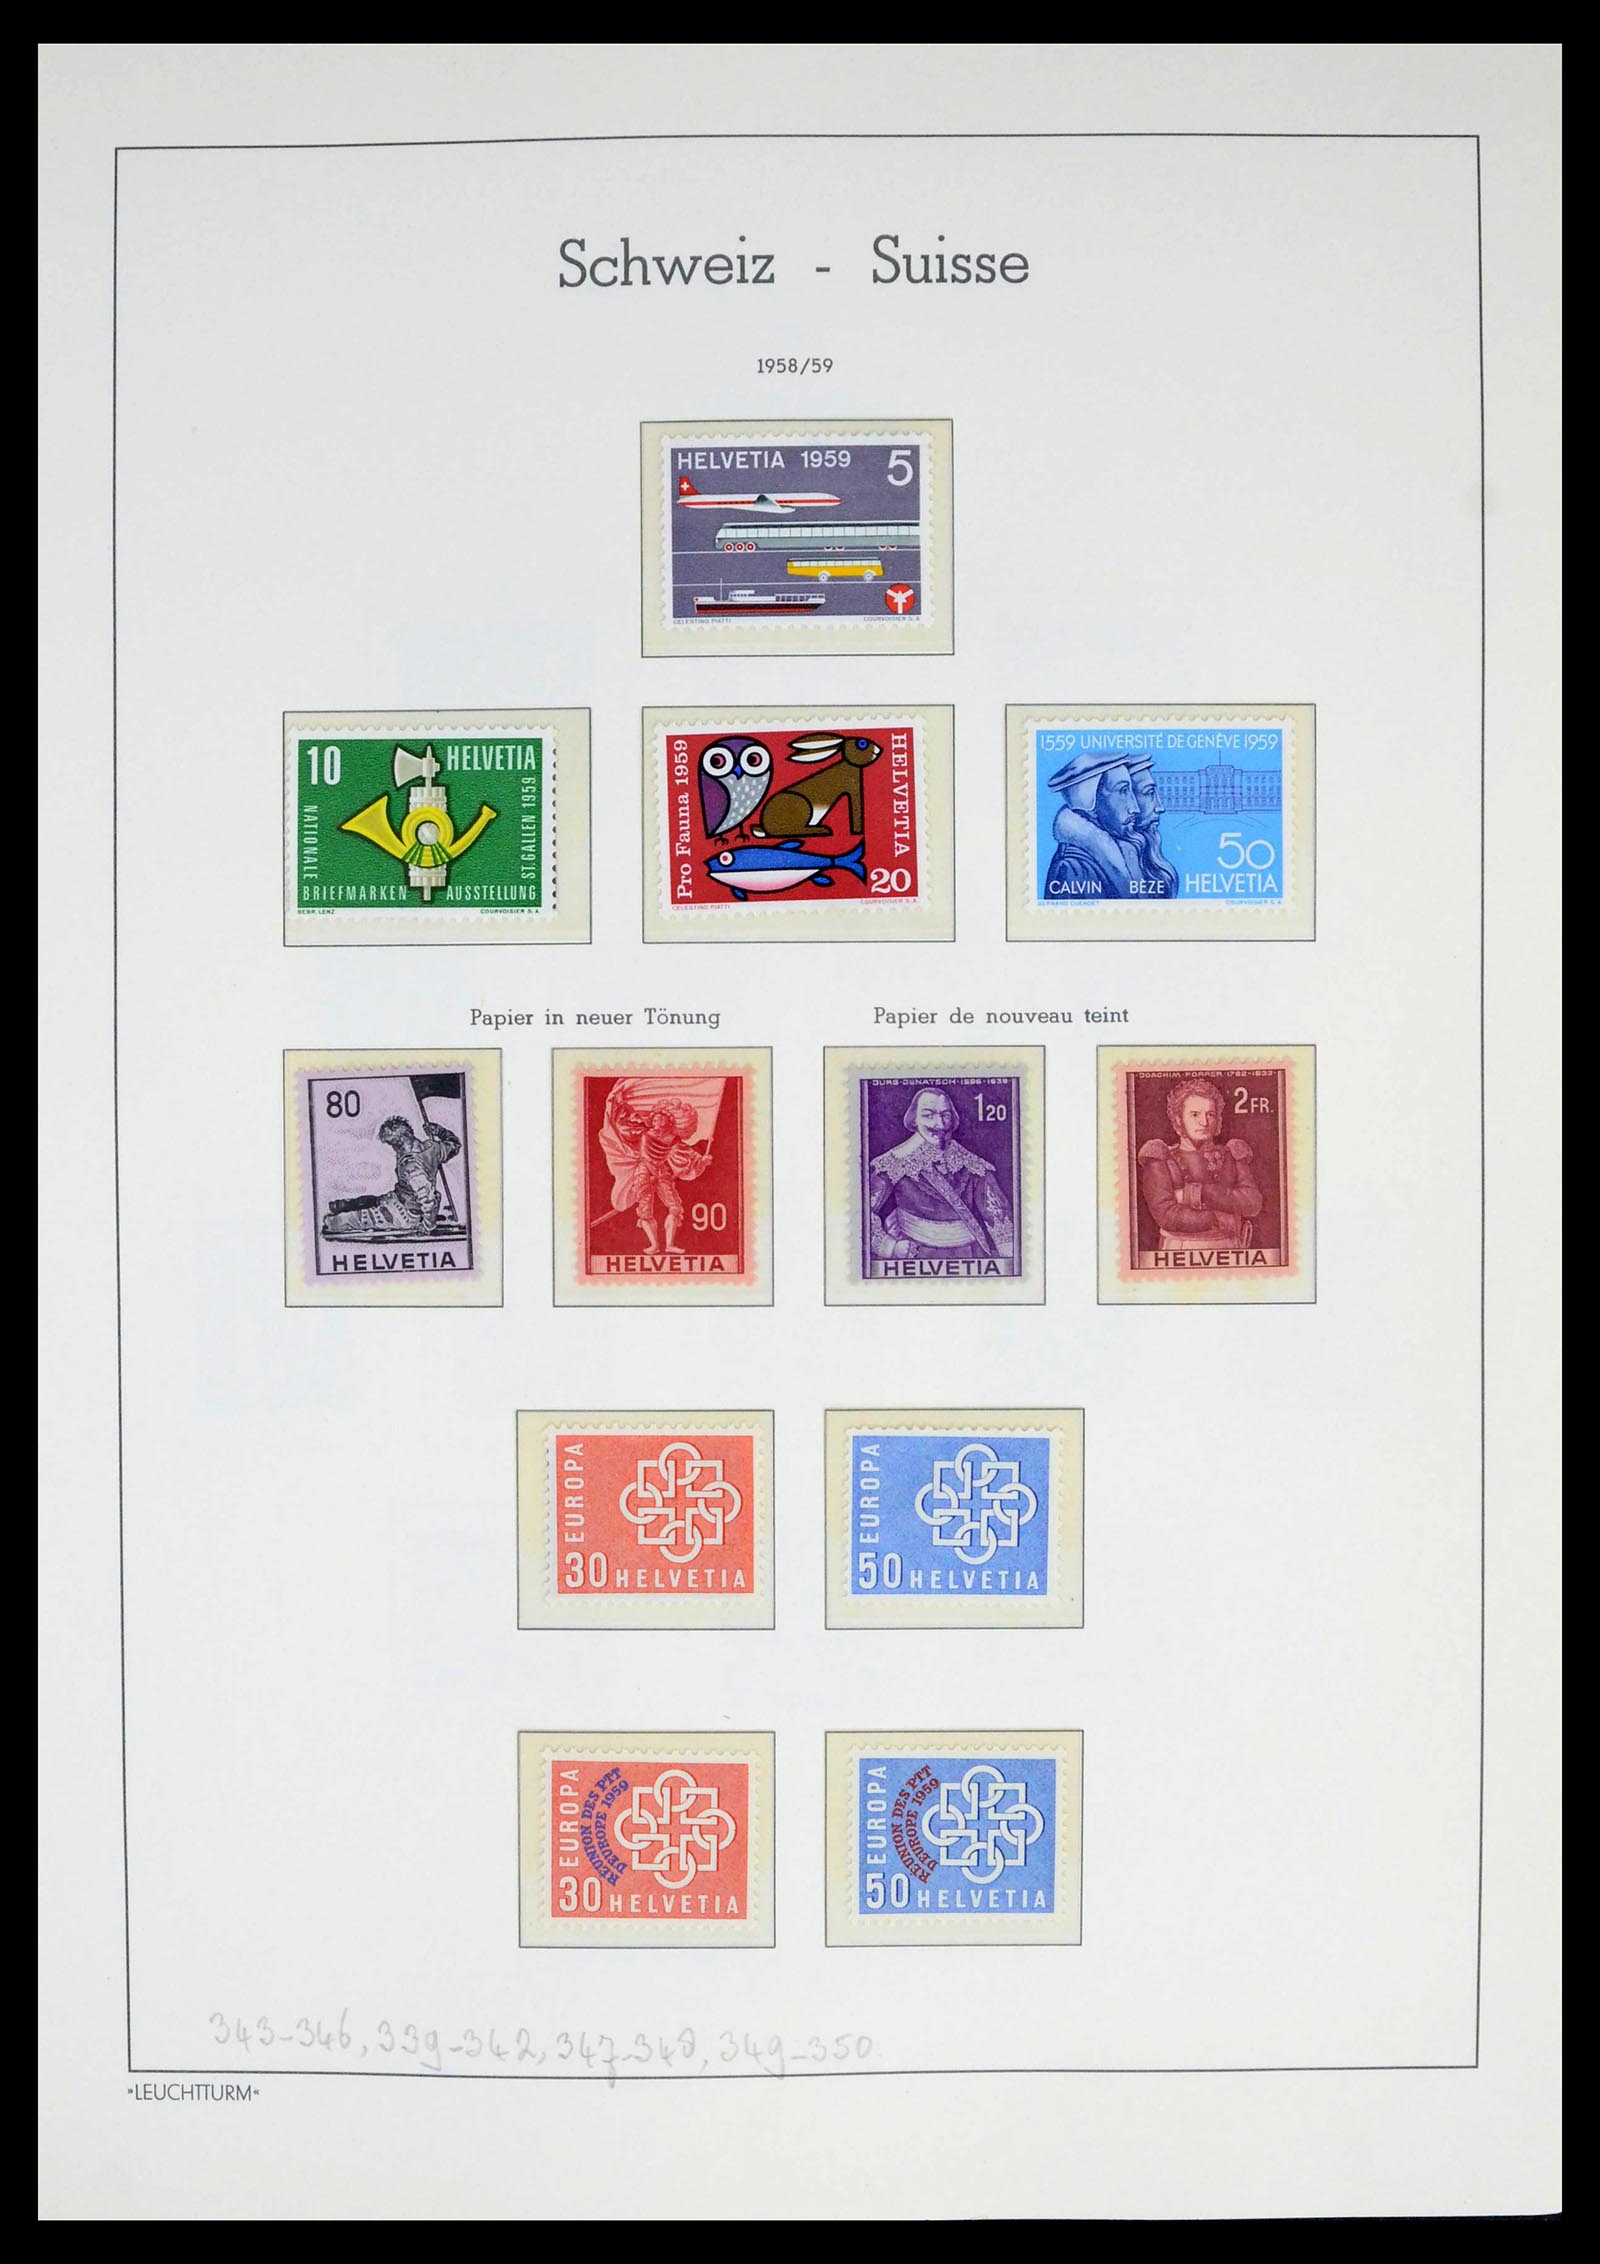 39420 0035 - Stamp collection 39420 Switzerland 1862-1974.